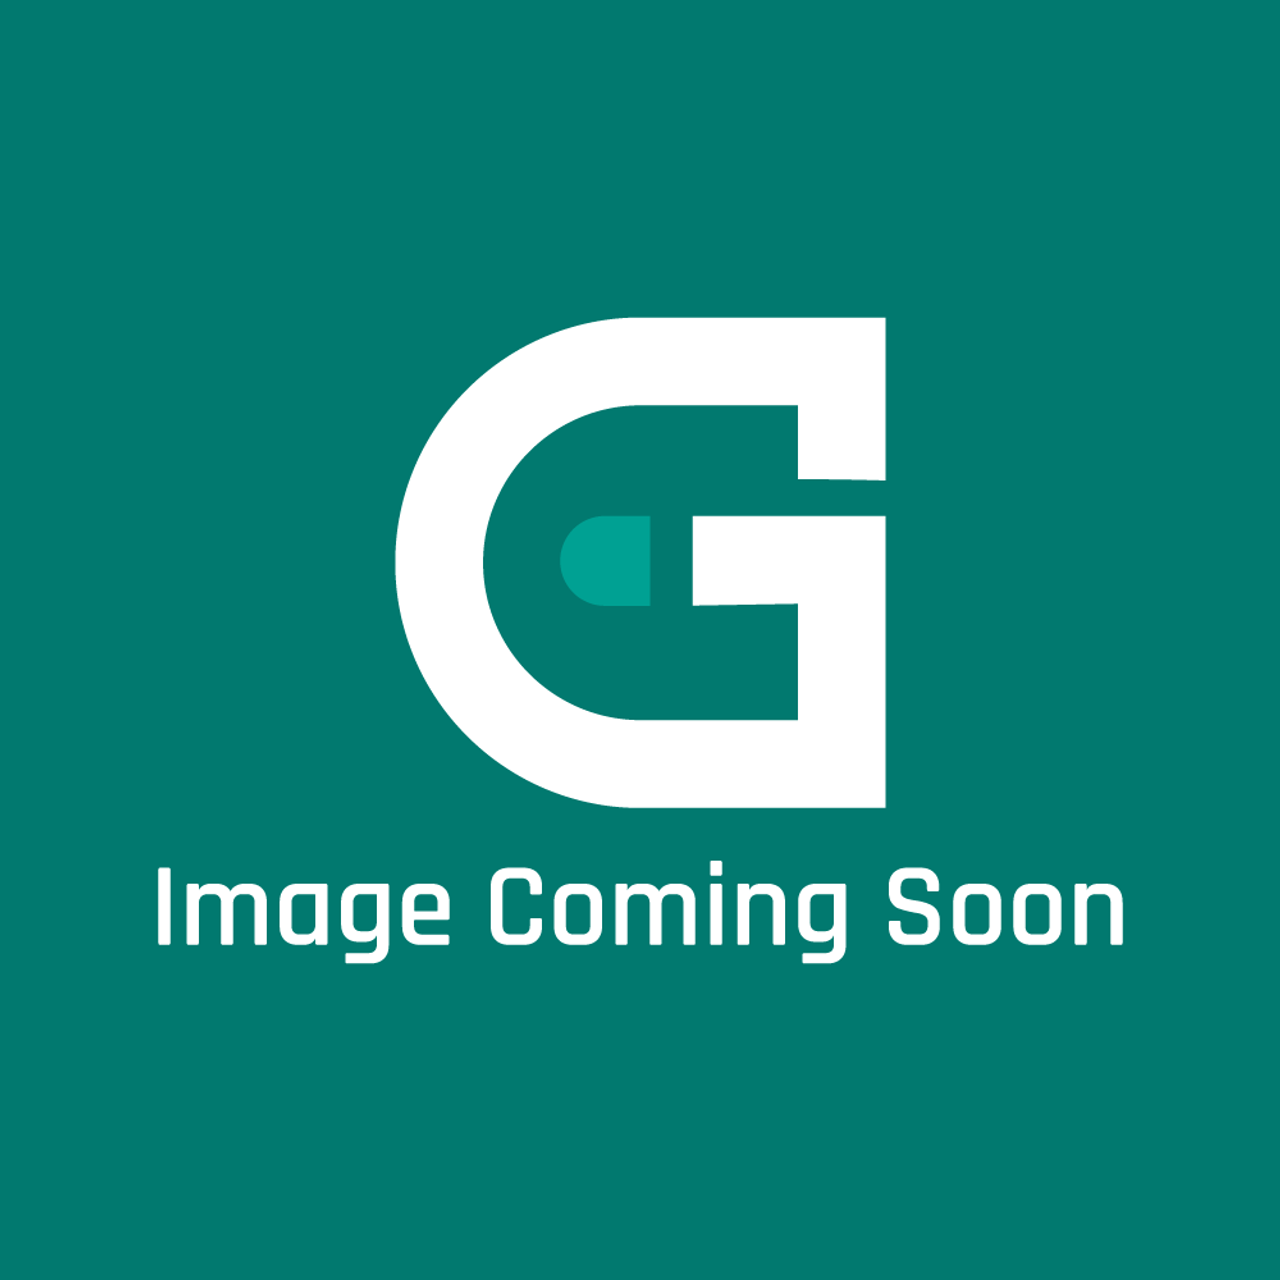 Garland CKG1685-03 - Lower Element Frame Assy -460 - Image Coming Soon!